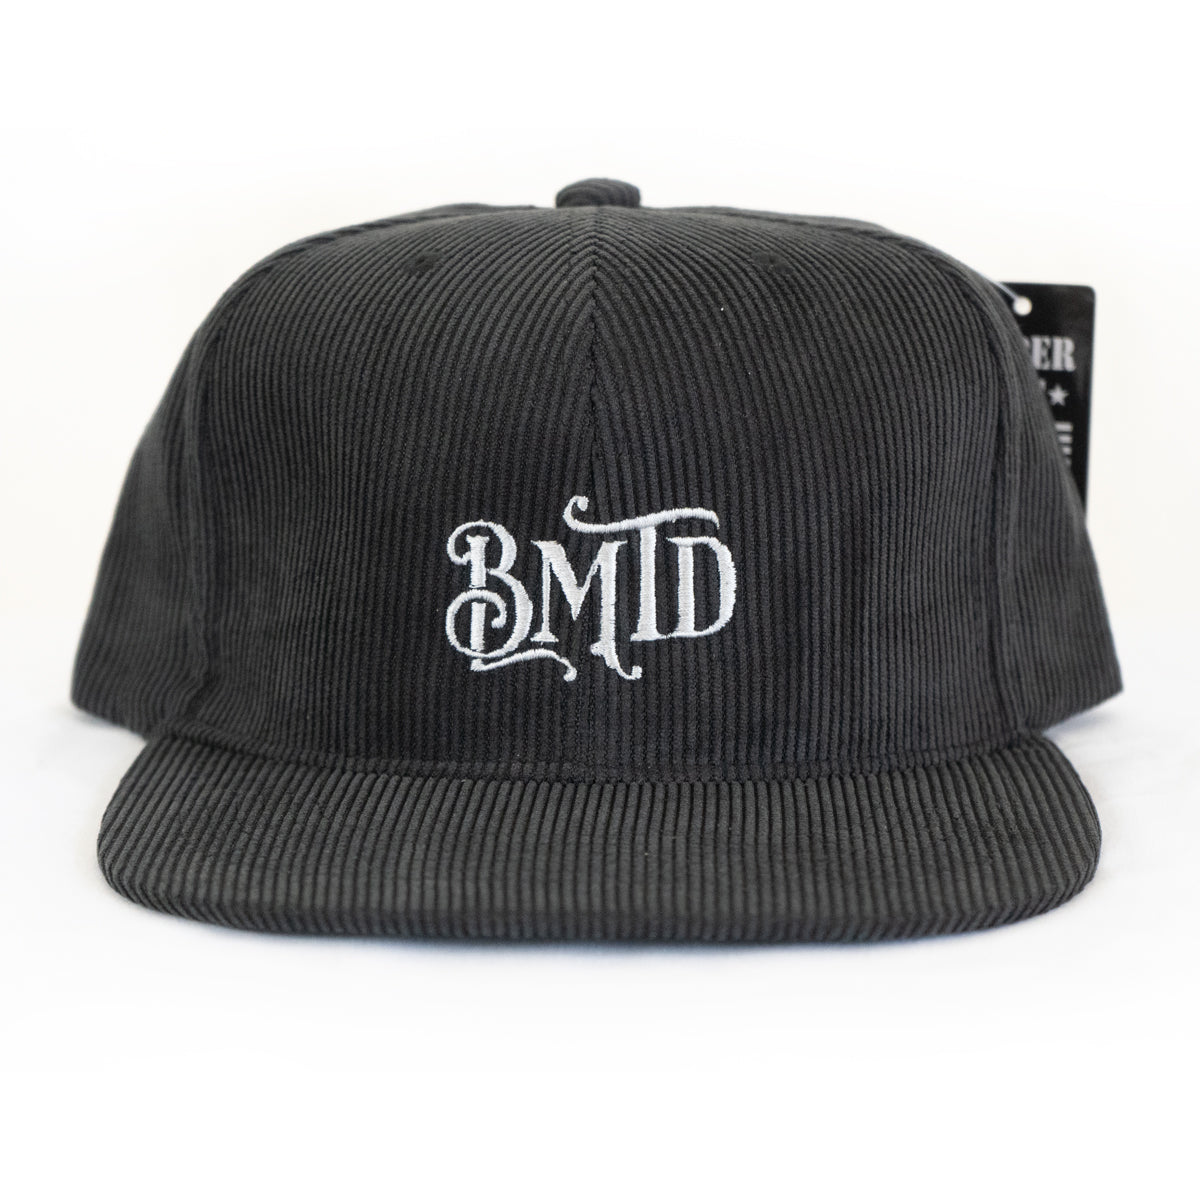 BLMTD Corduroy Snapback hat